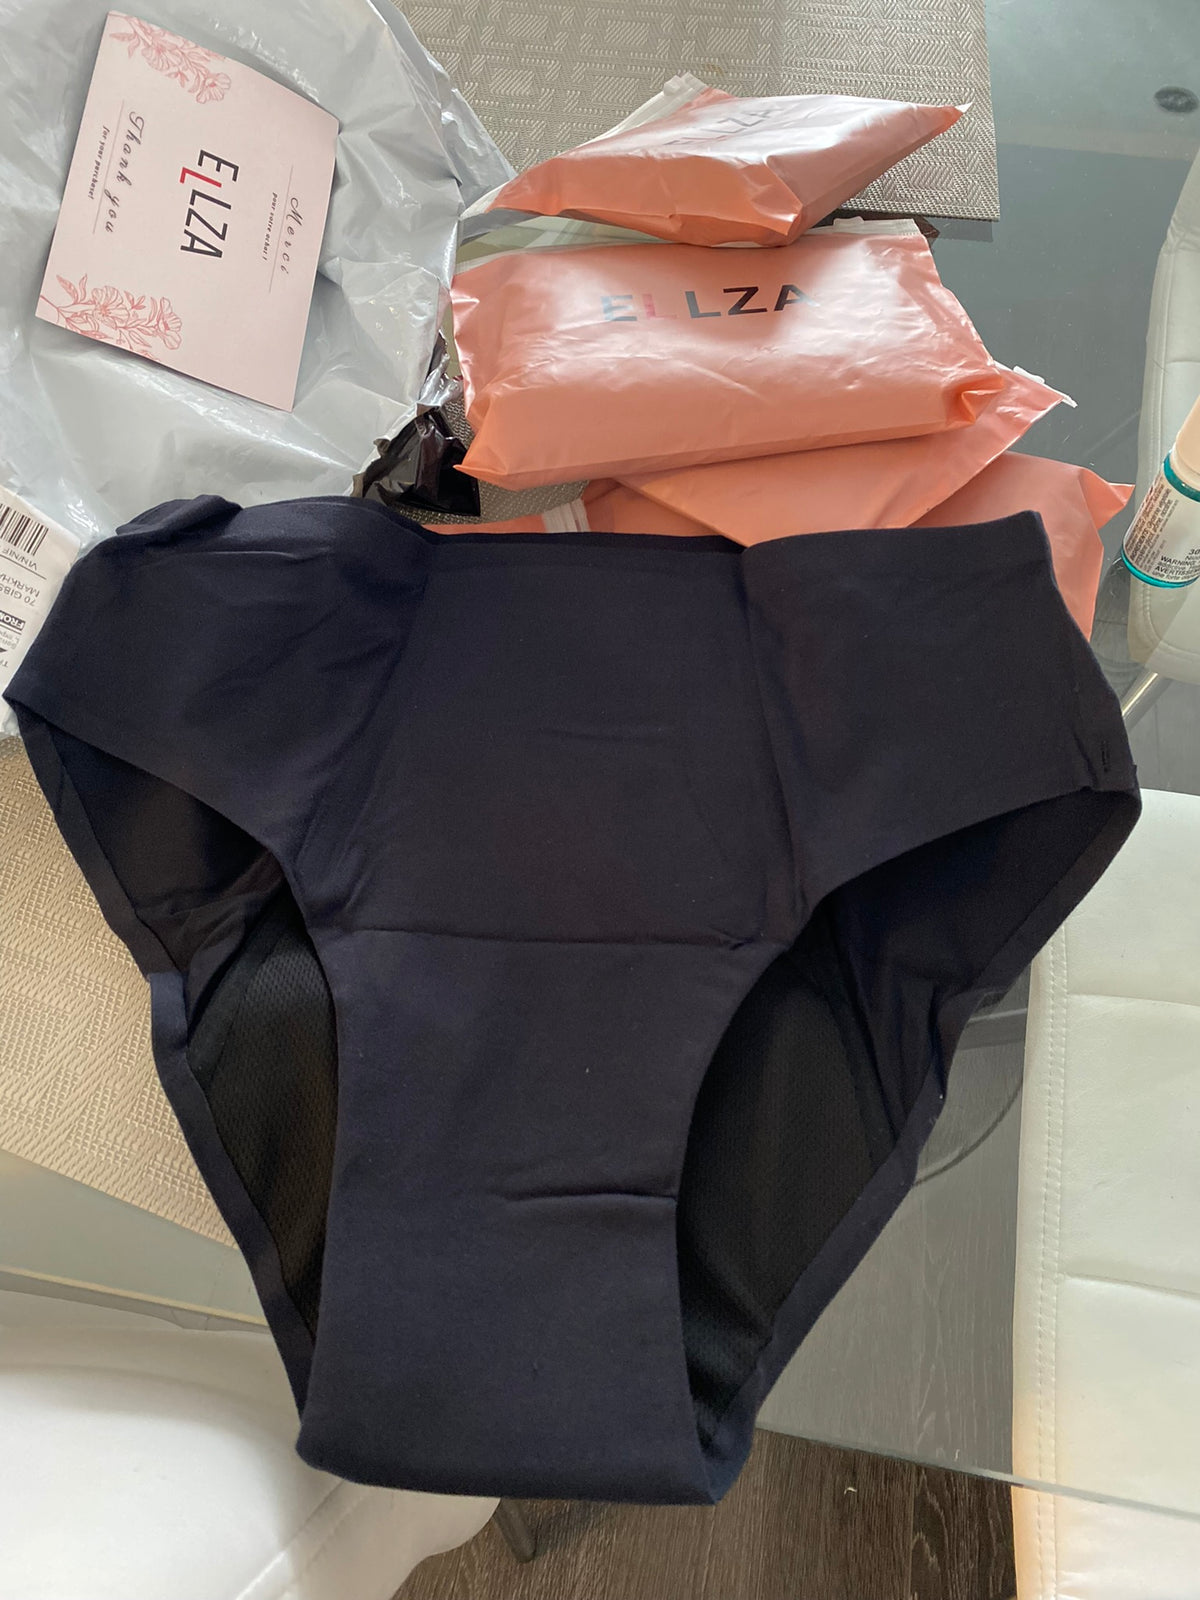 Ellza Period Underwear - Lilia Model (Teen Size) – Ellza Panties